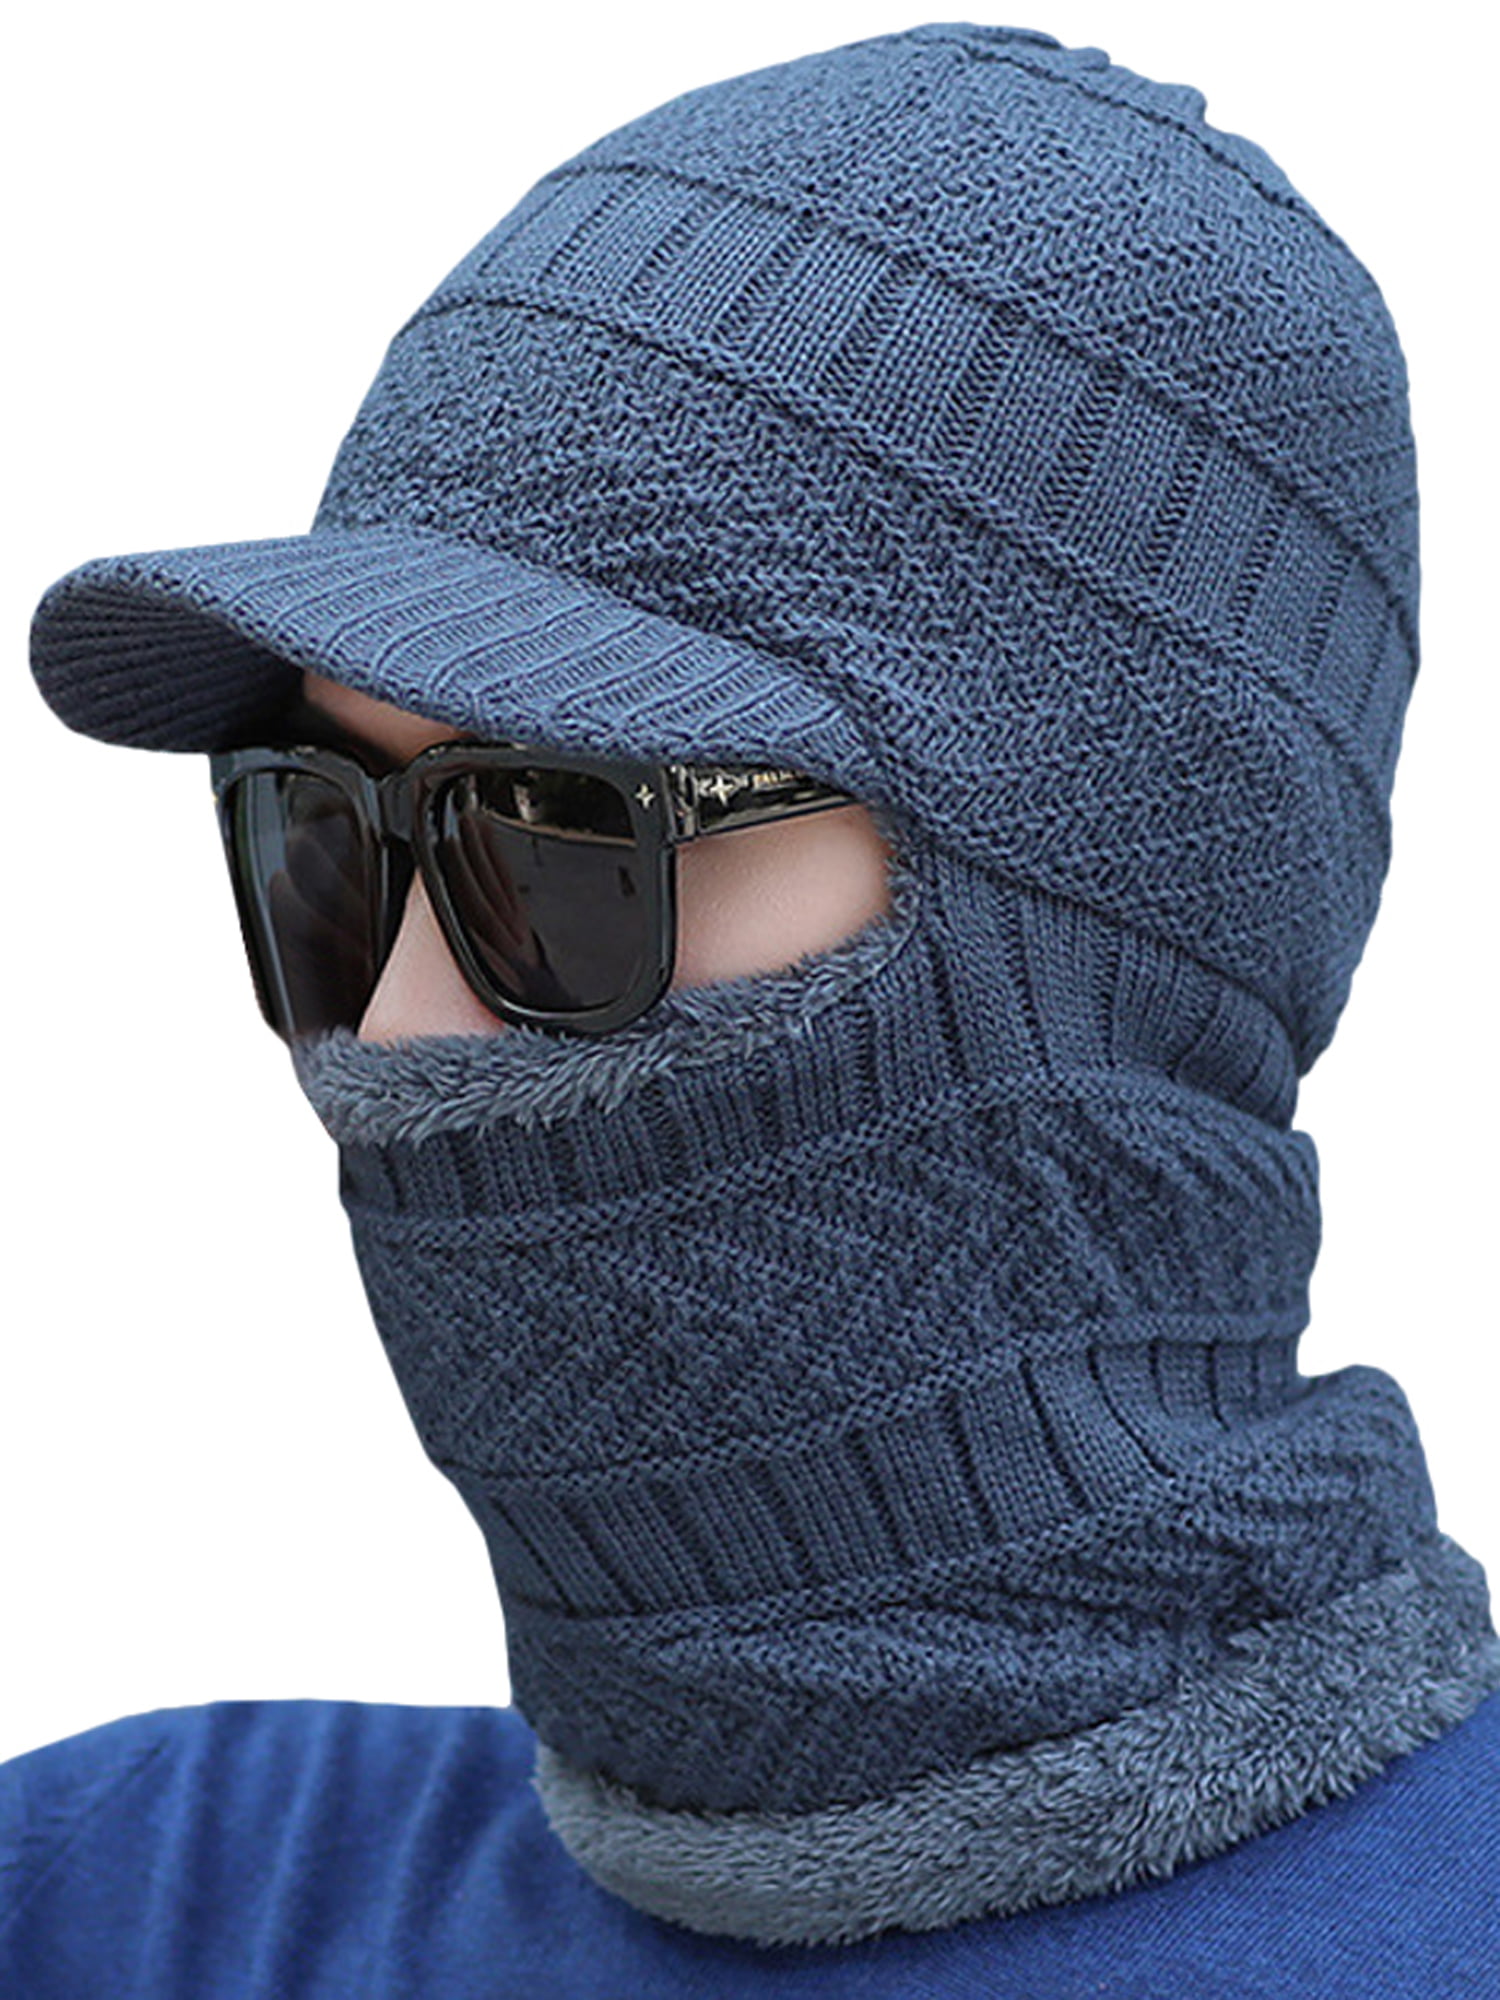 Winter Warm Balaclava Hat Full Face Mask Ski Mask Cap Neck Warmer Outdoor Supply